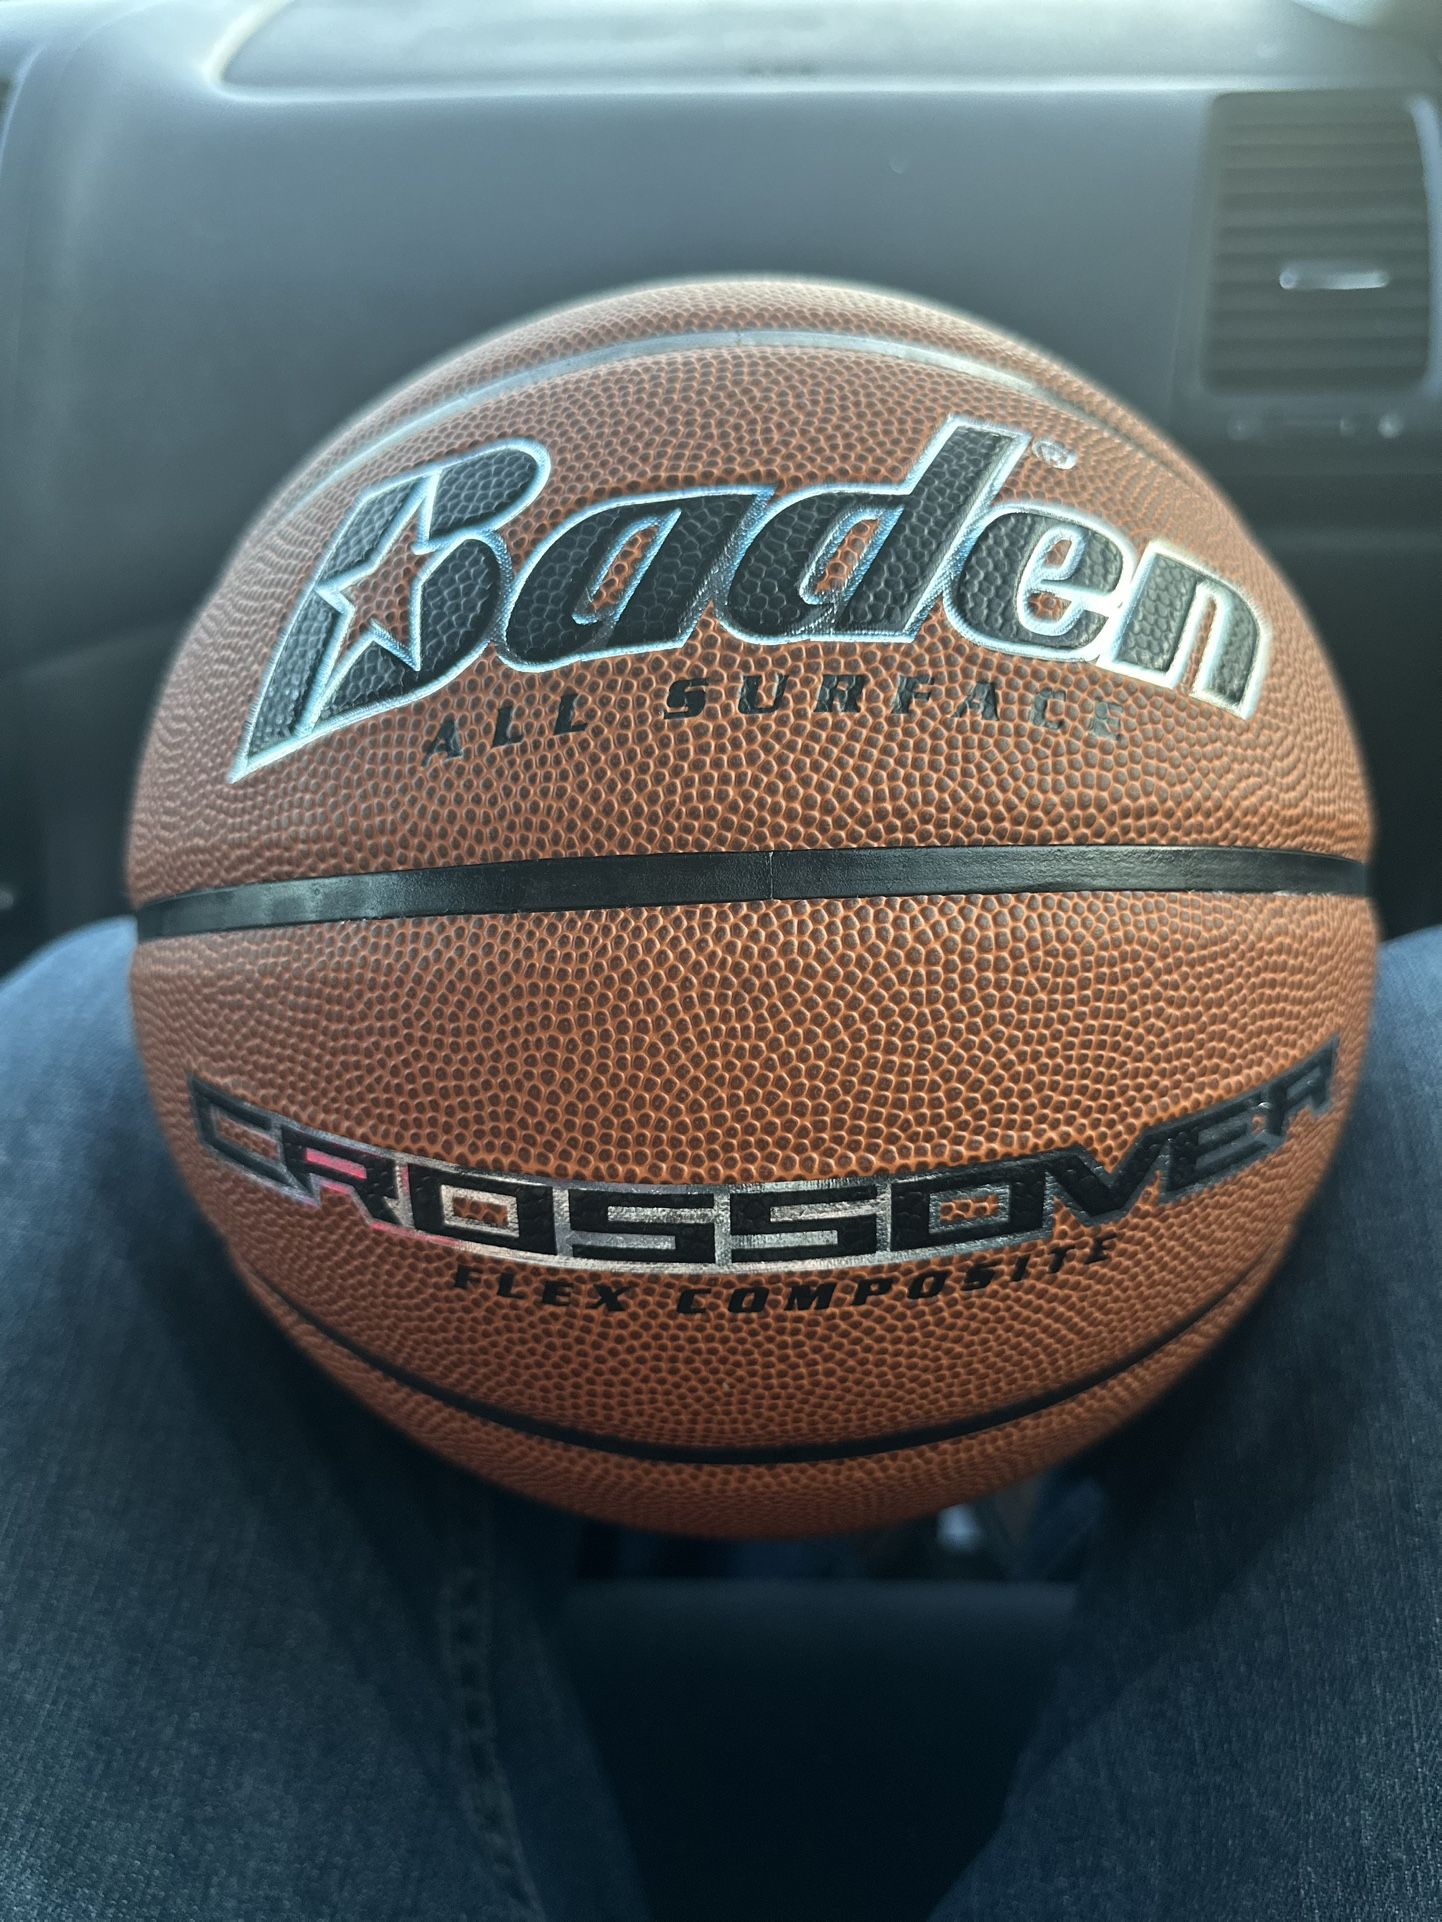 Baden Crossover Basketball 